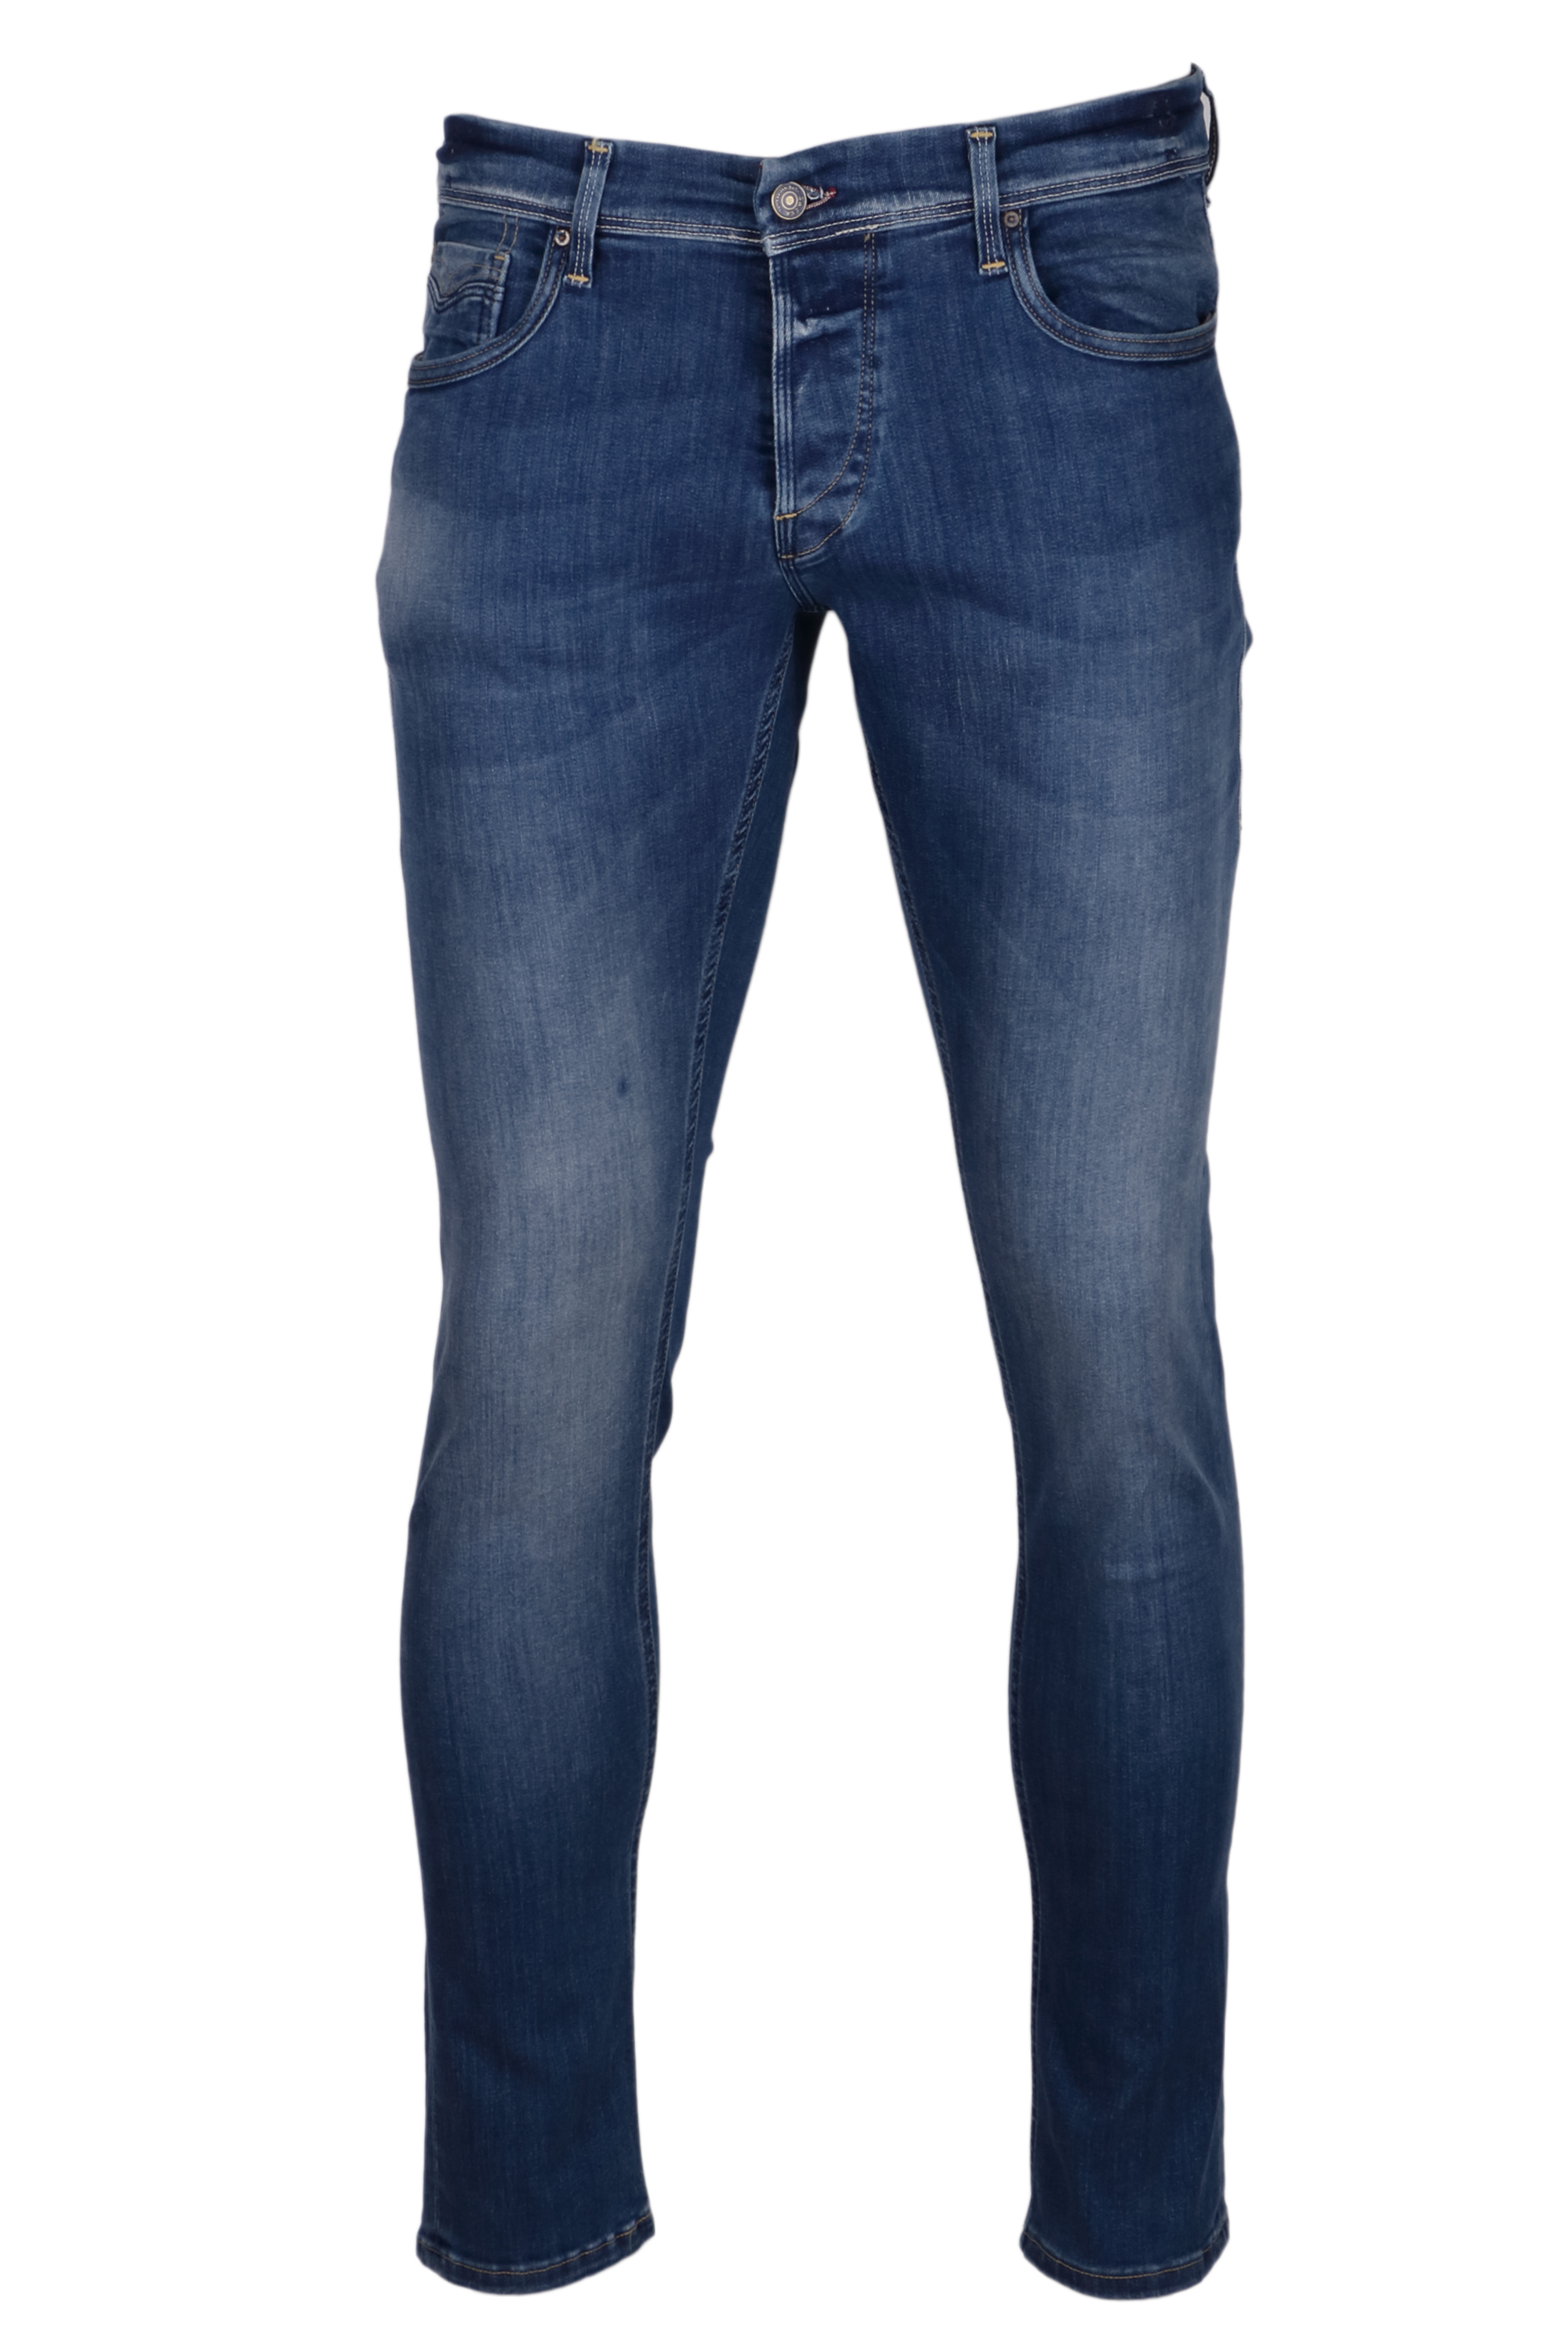 Salsa Herren Jeans Clash, Skinny, premium Flex 34/32